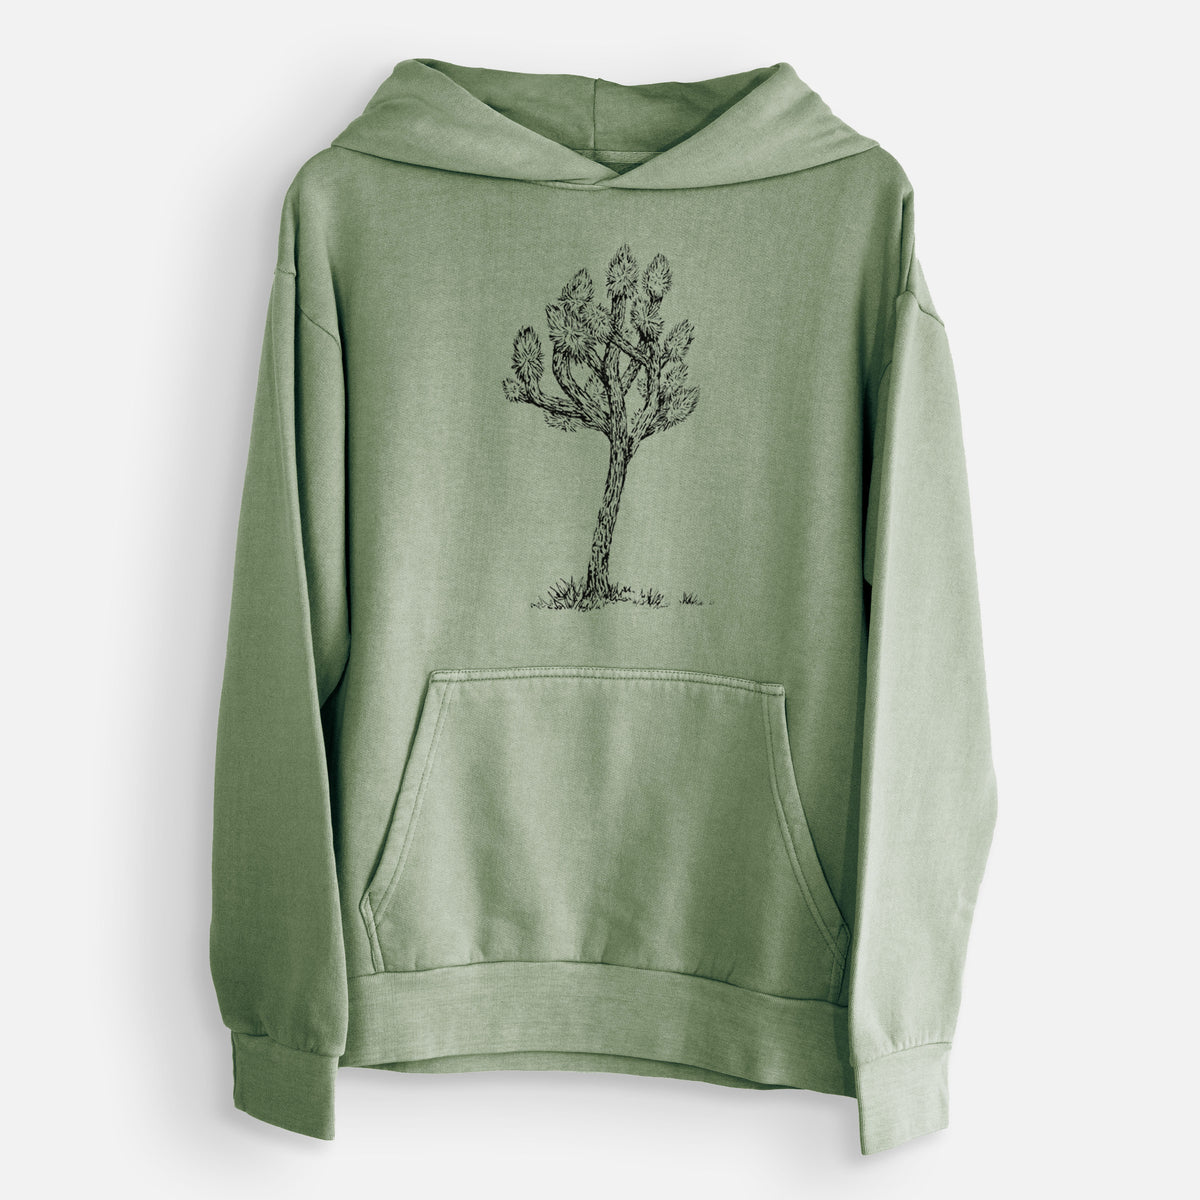 Yucca brevifolia - Joshua Tree  - Urban Heavyweight Hoodie